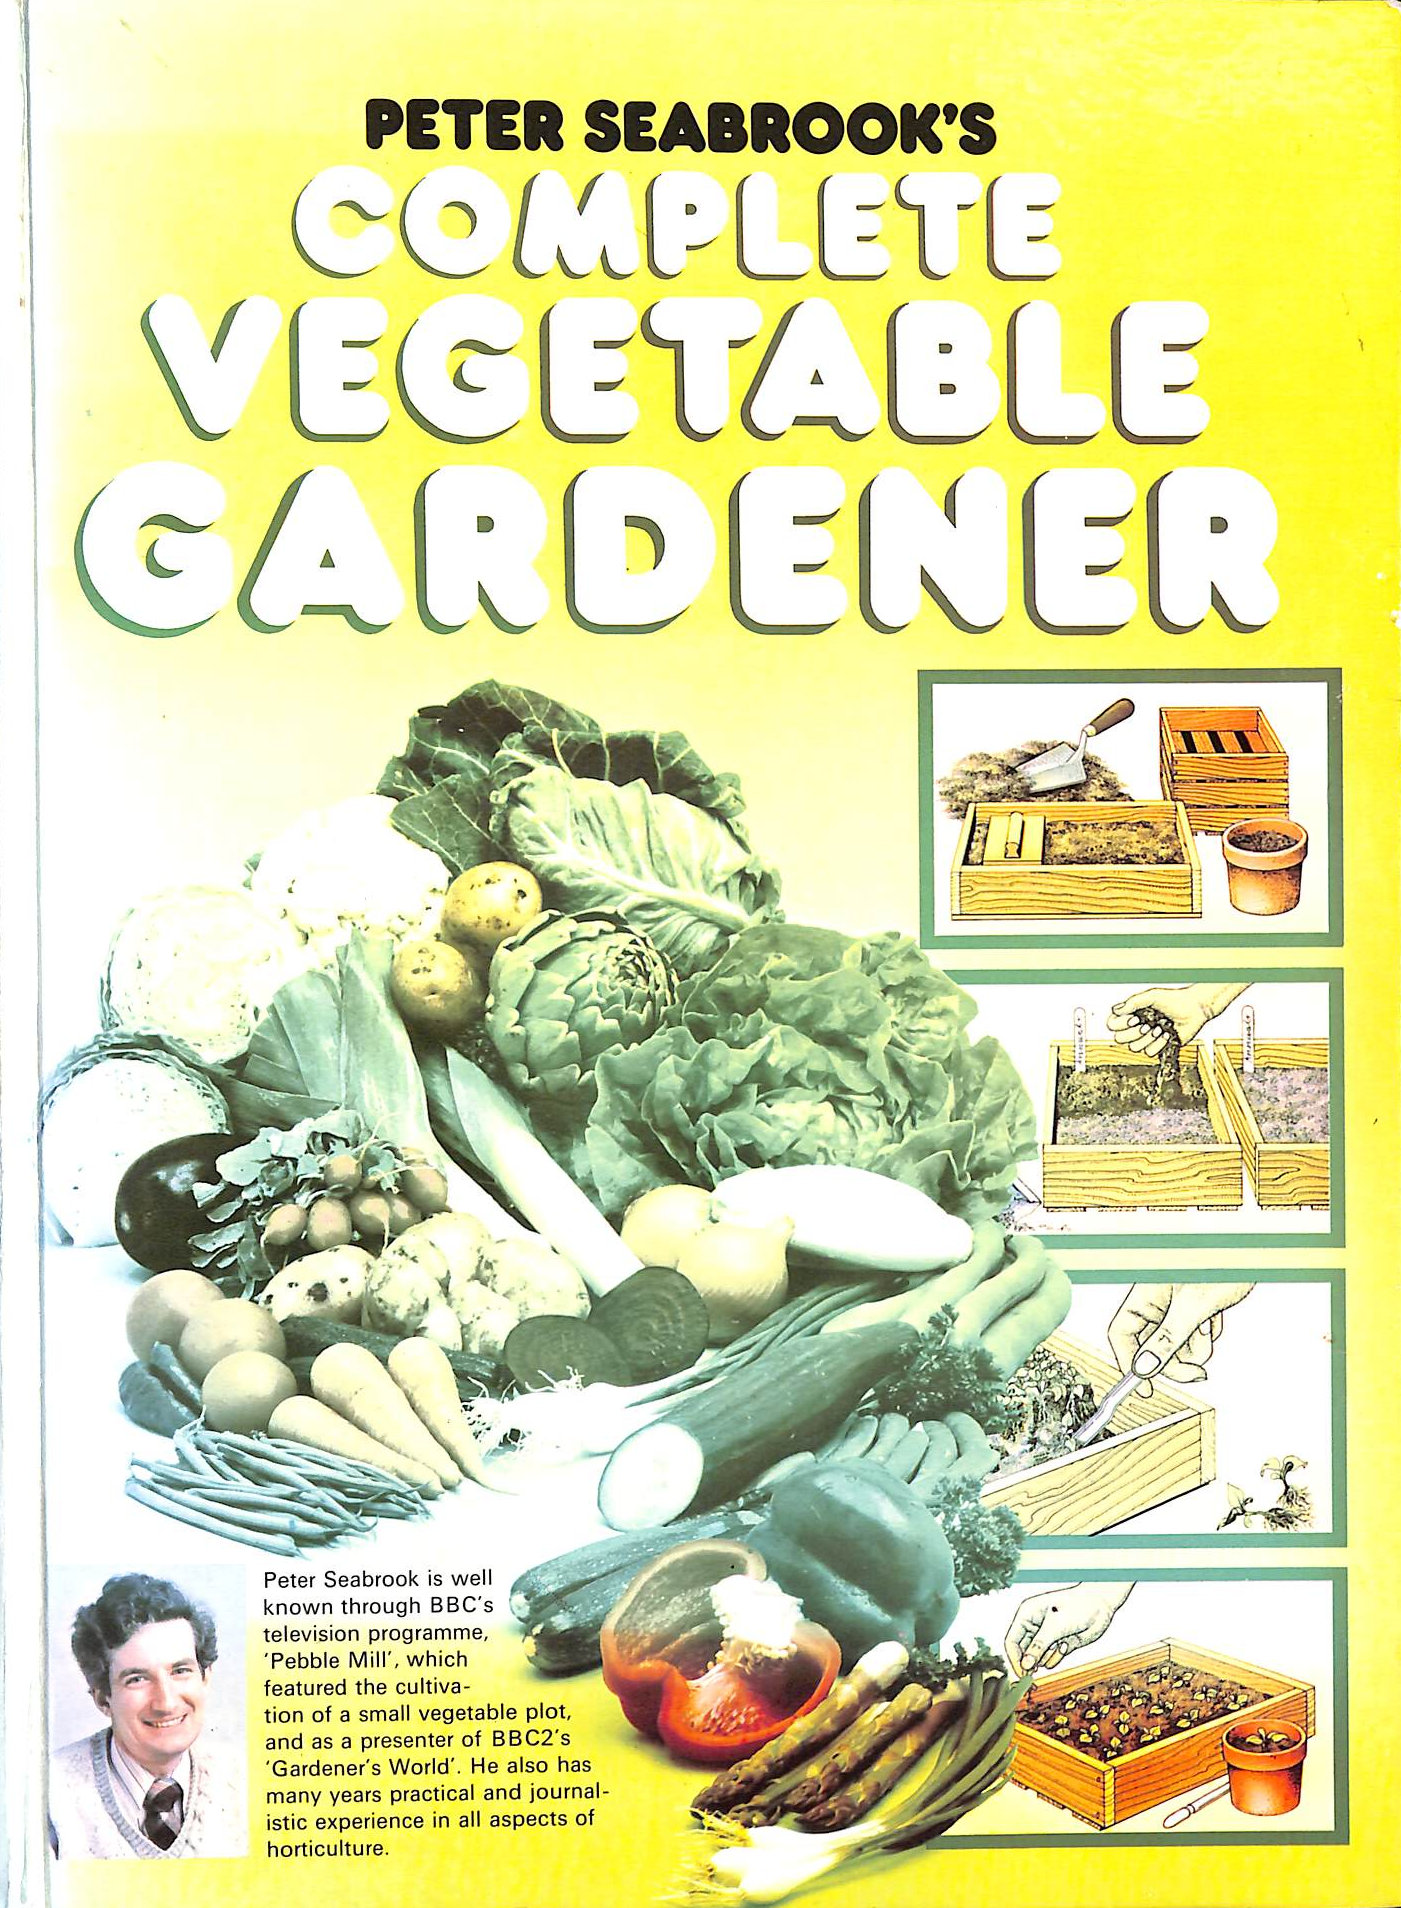 SEABROOK, PETER - Complete Vegetable Gardener